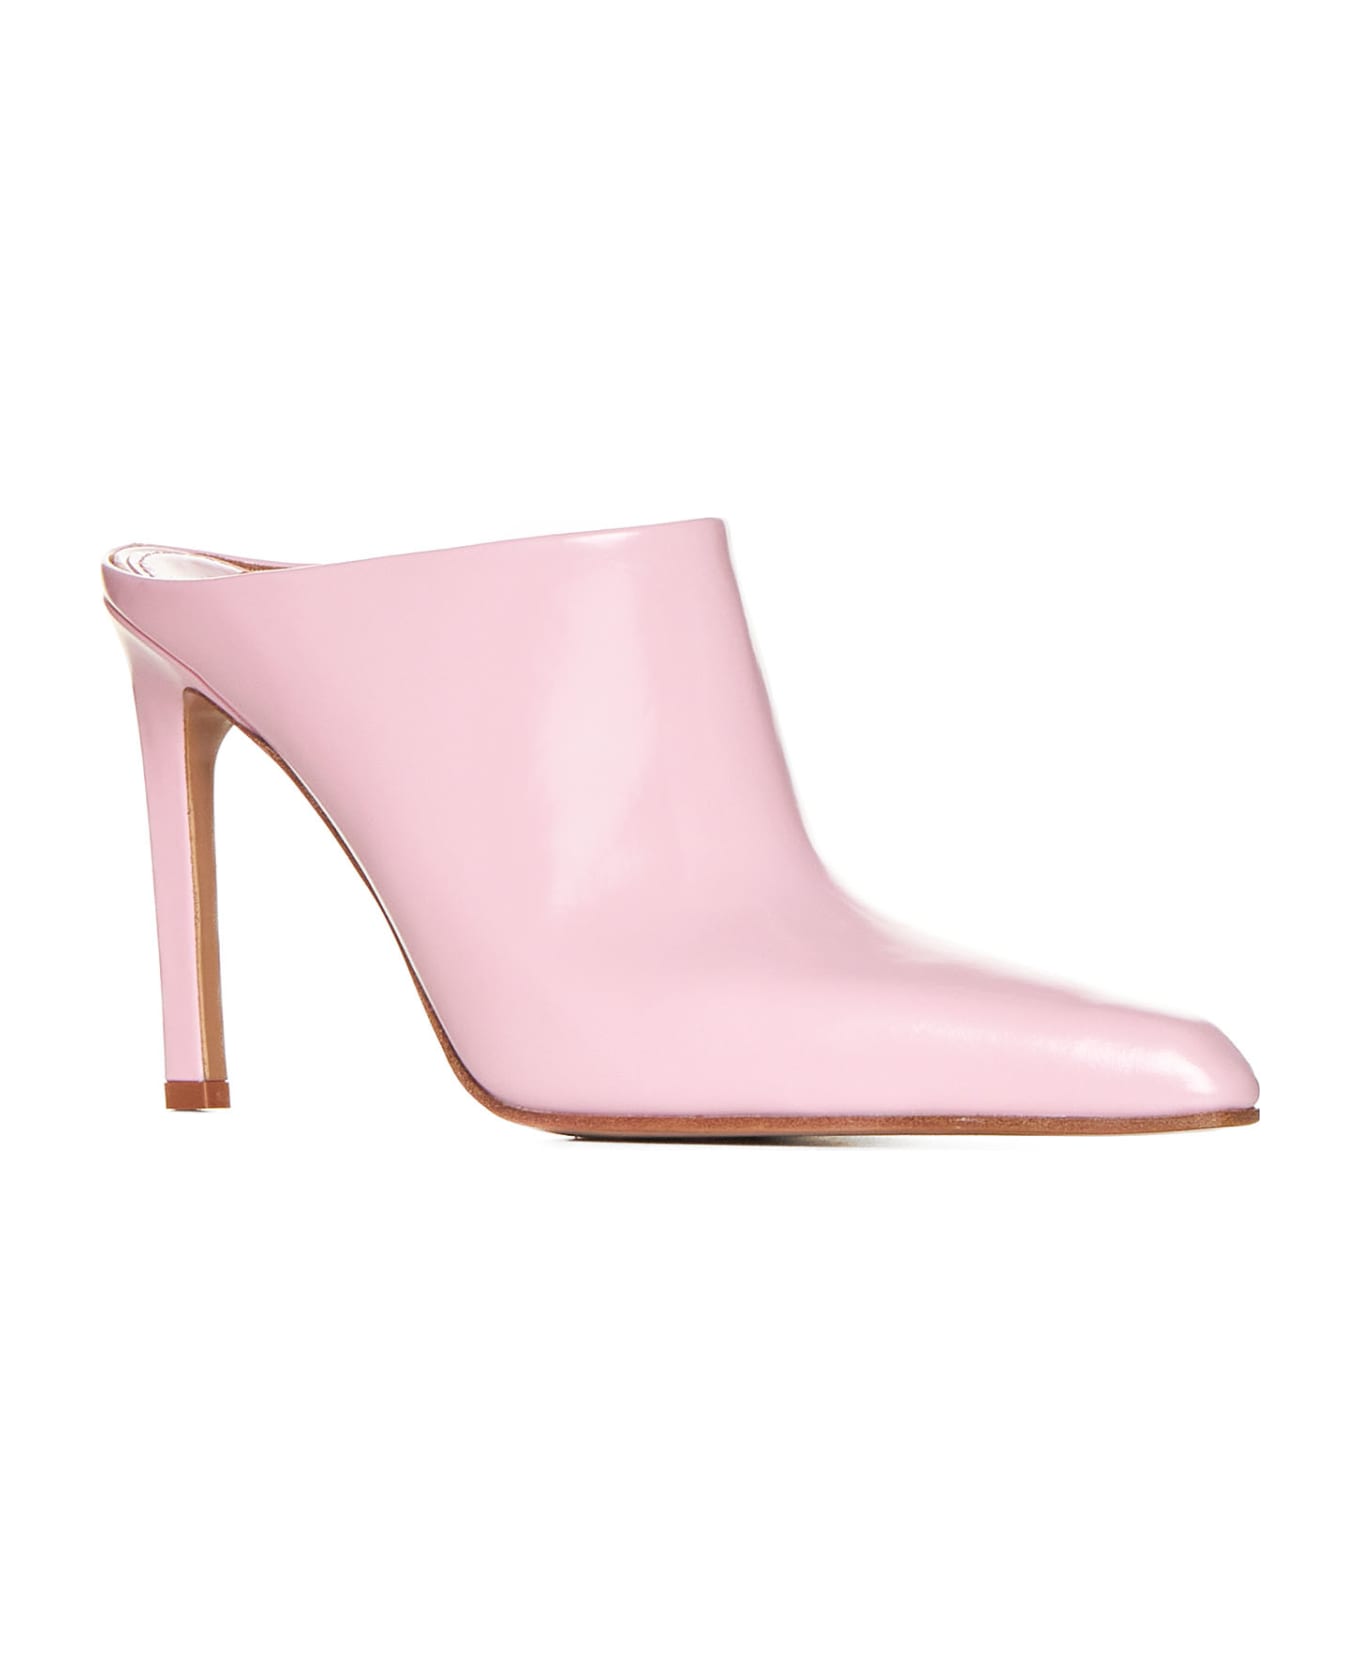 Paris Texas Sandals - Pink